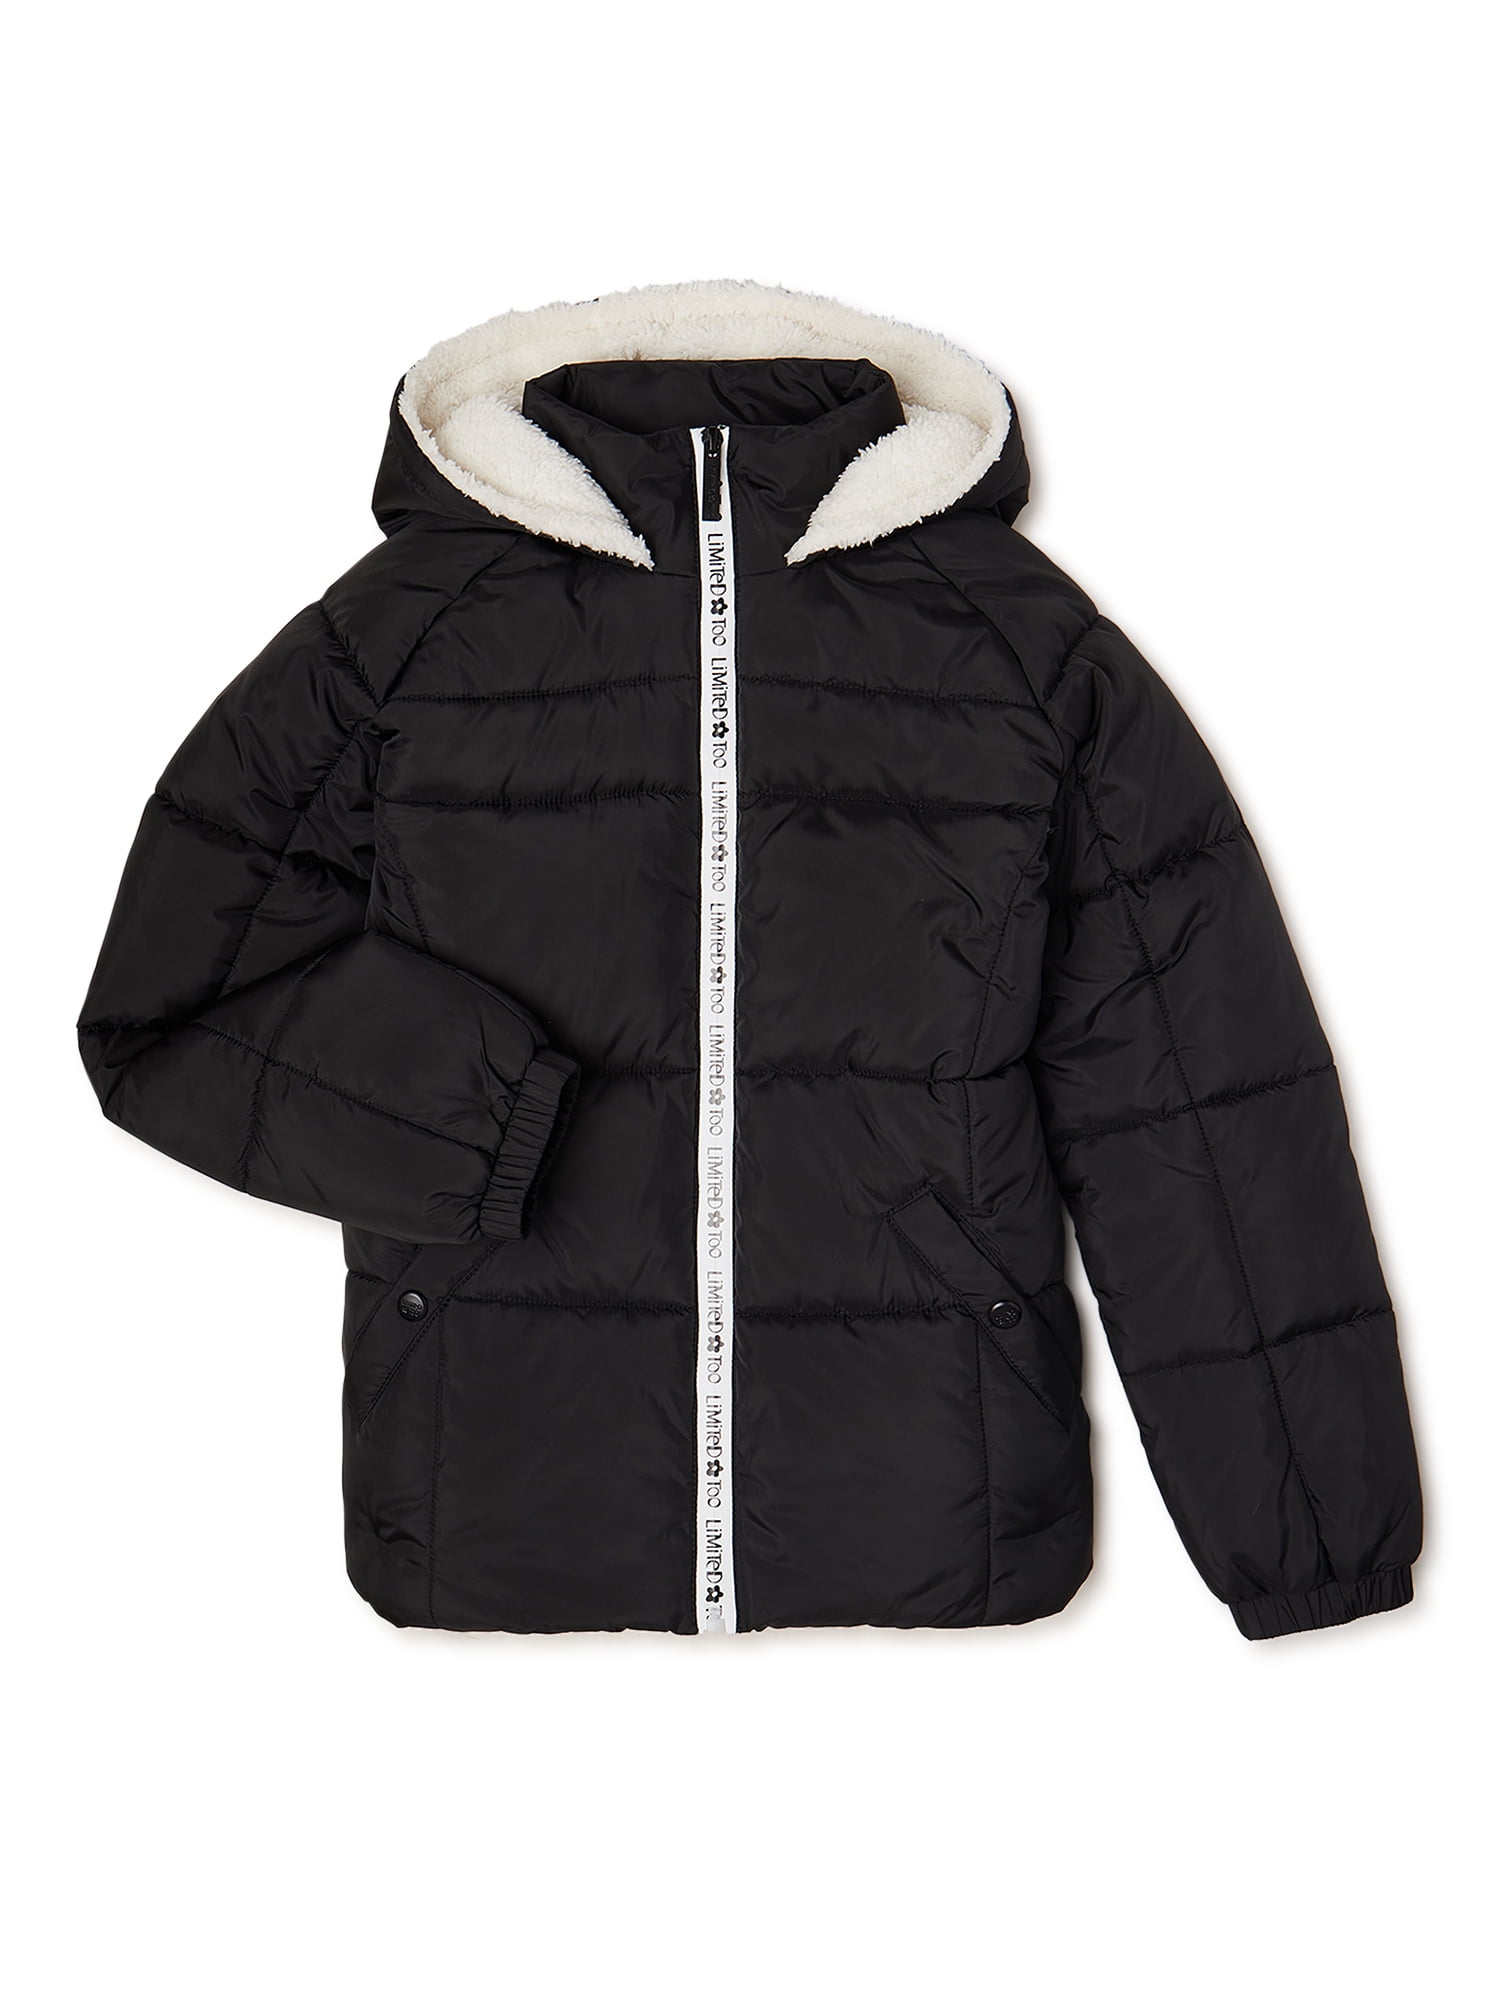 Michael Kors Plus Size Fleece-Trim Hooded Puffer Coat, Created For Macy's  Reviews Coats Jackets Plus Sizes Macy's 